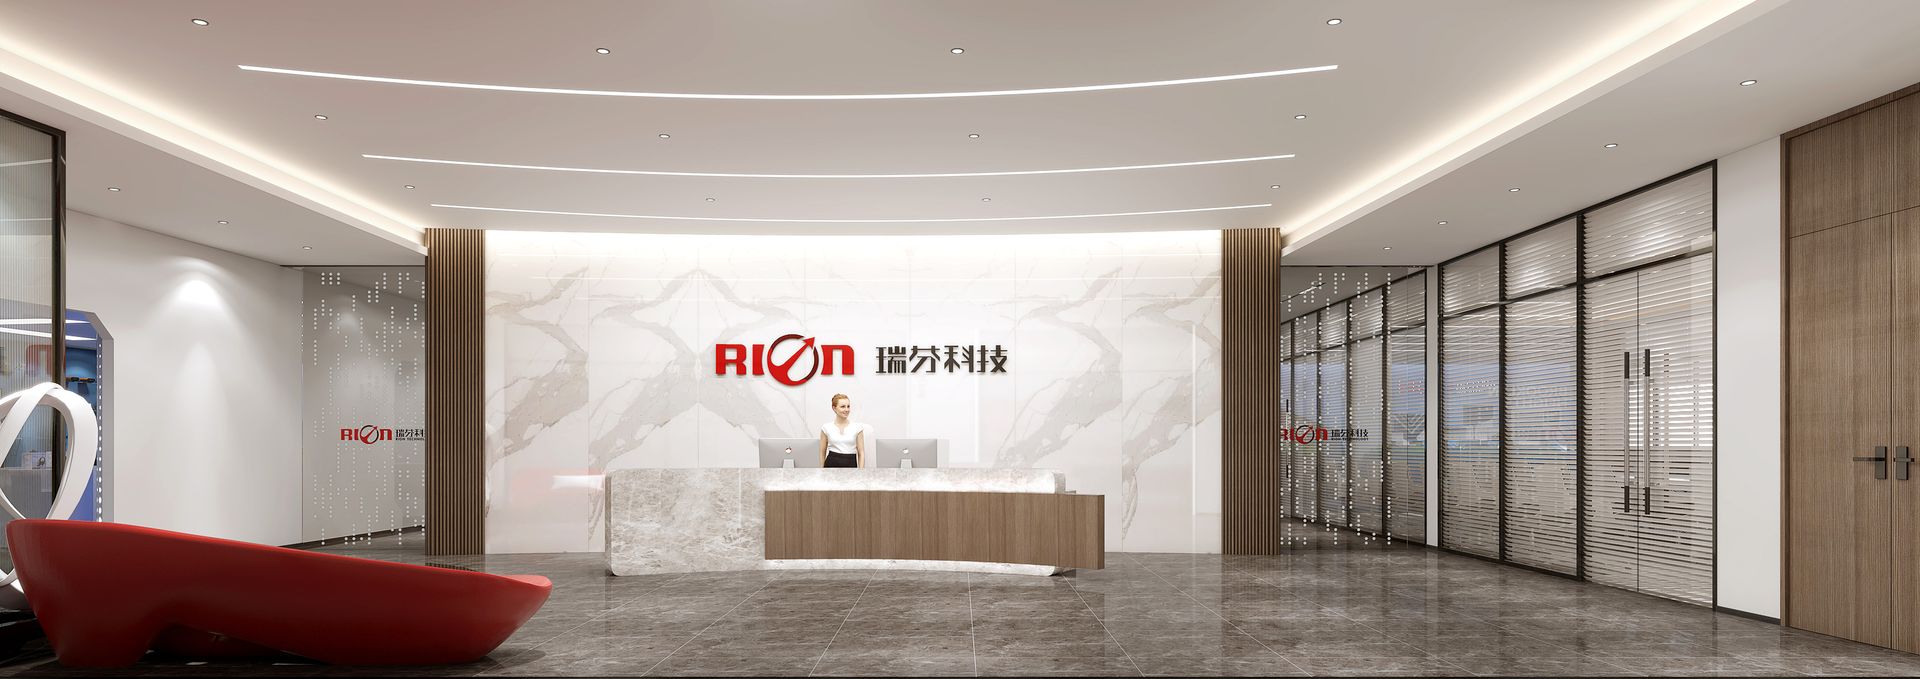 Shenzhen Rion Technology Co., Ltd